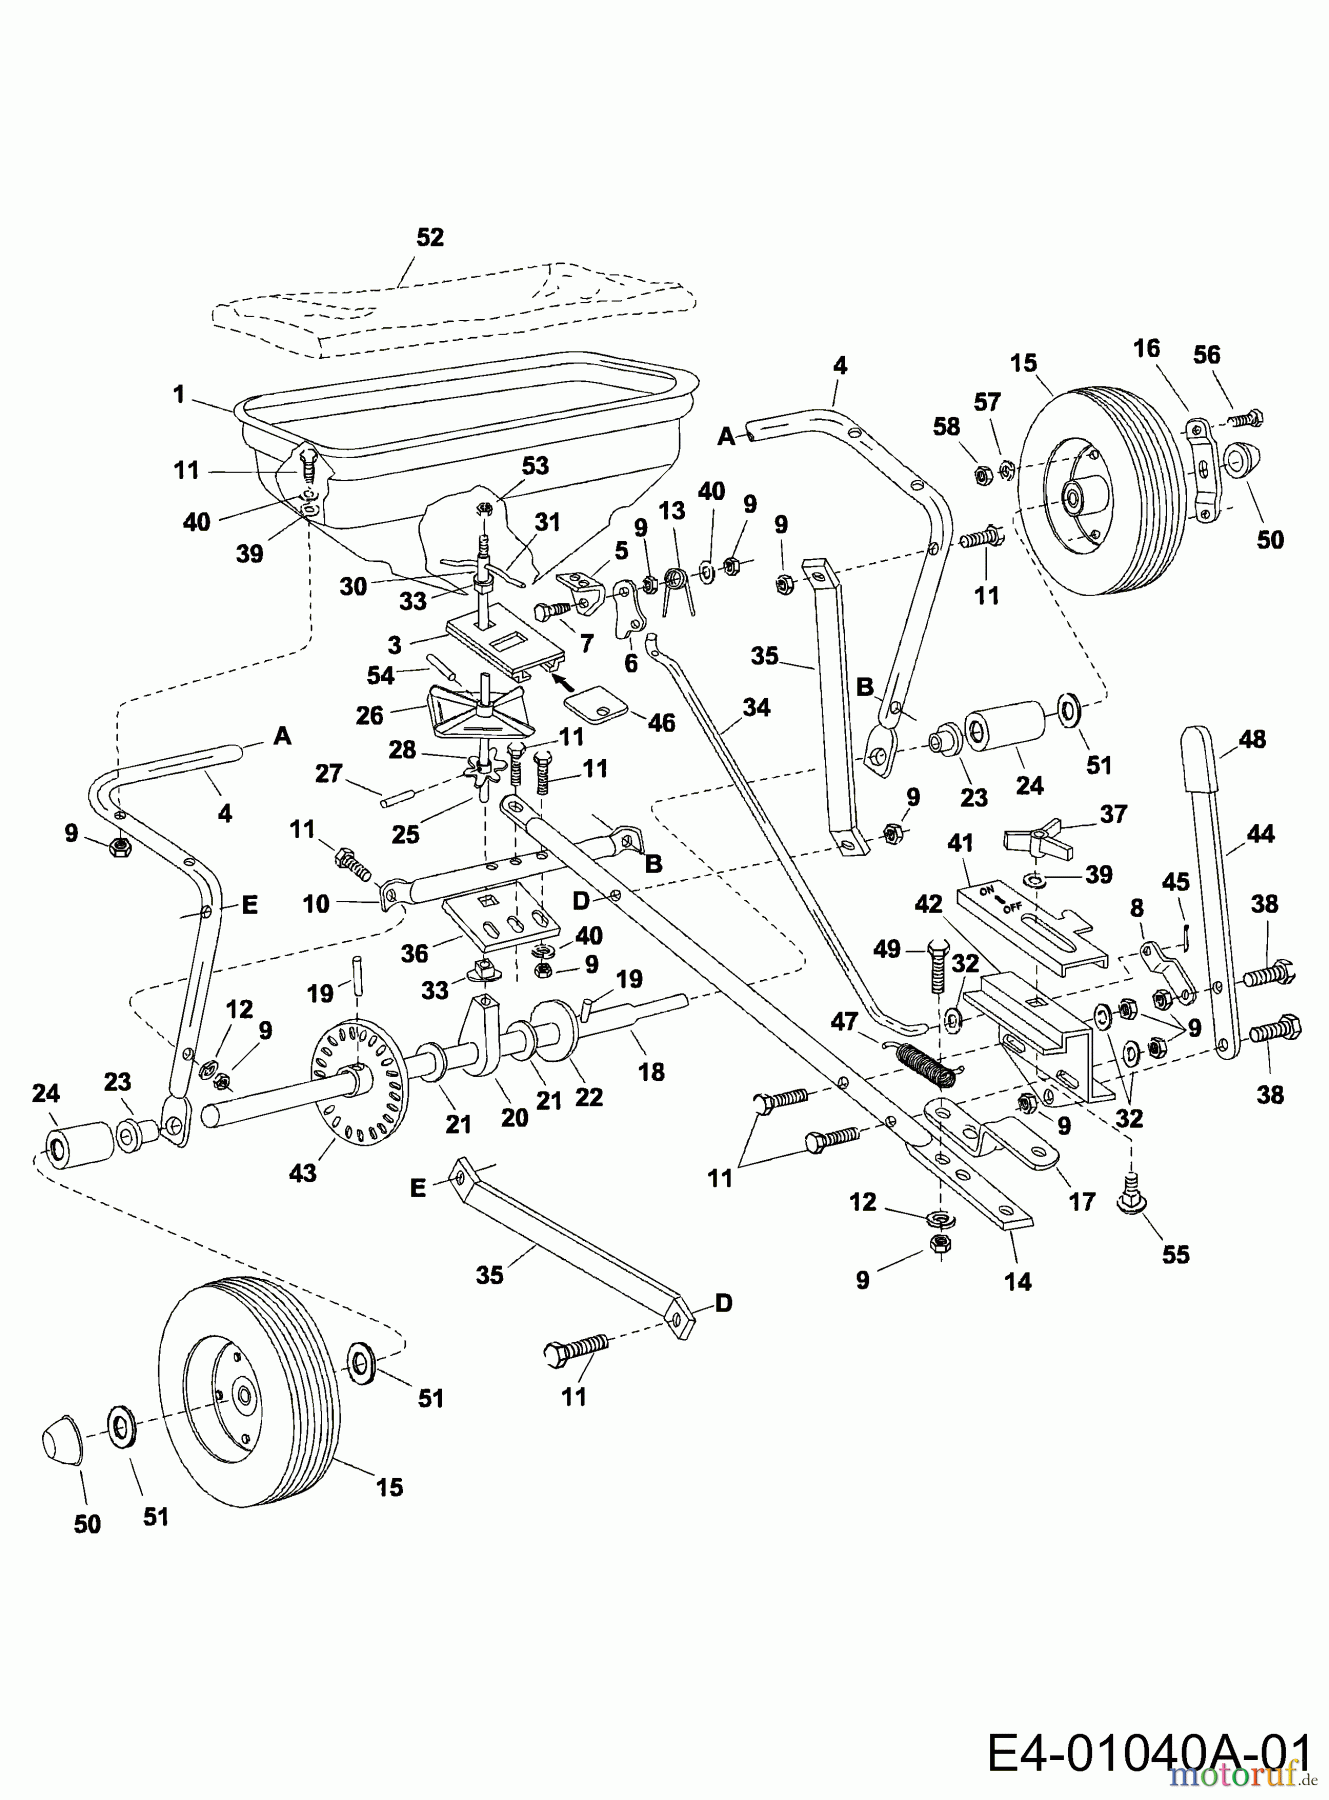  MTD Accessories Accessories garden and lawn tractors Spreader 45-02151  (190-525-000) 190-525-000  (1999) Basic machine